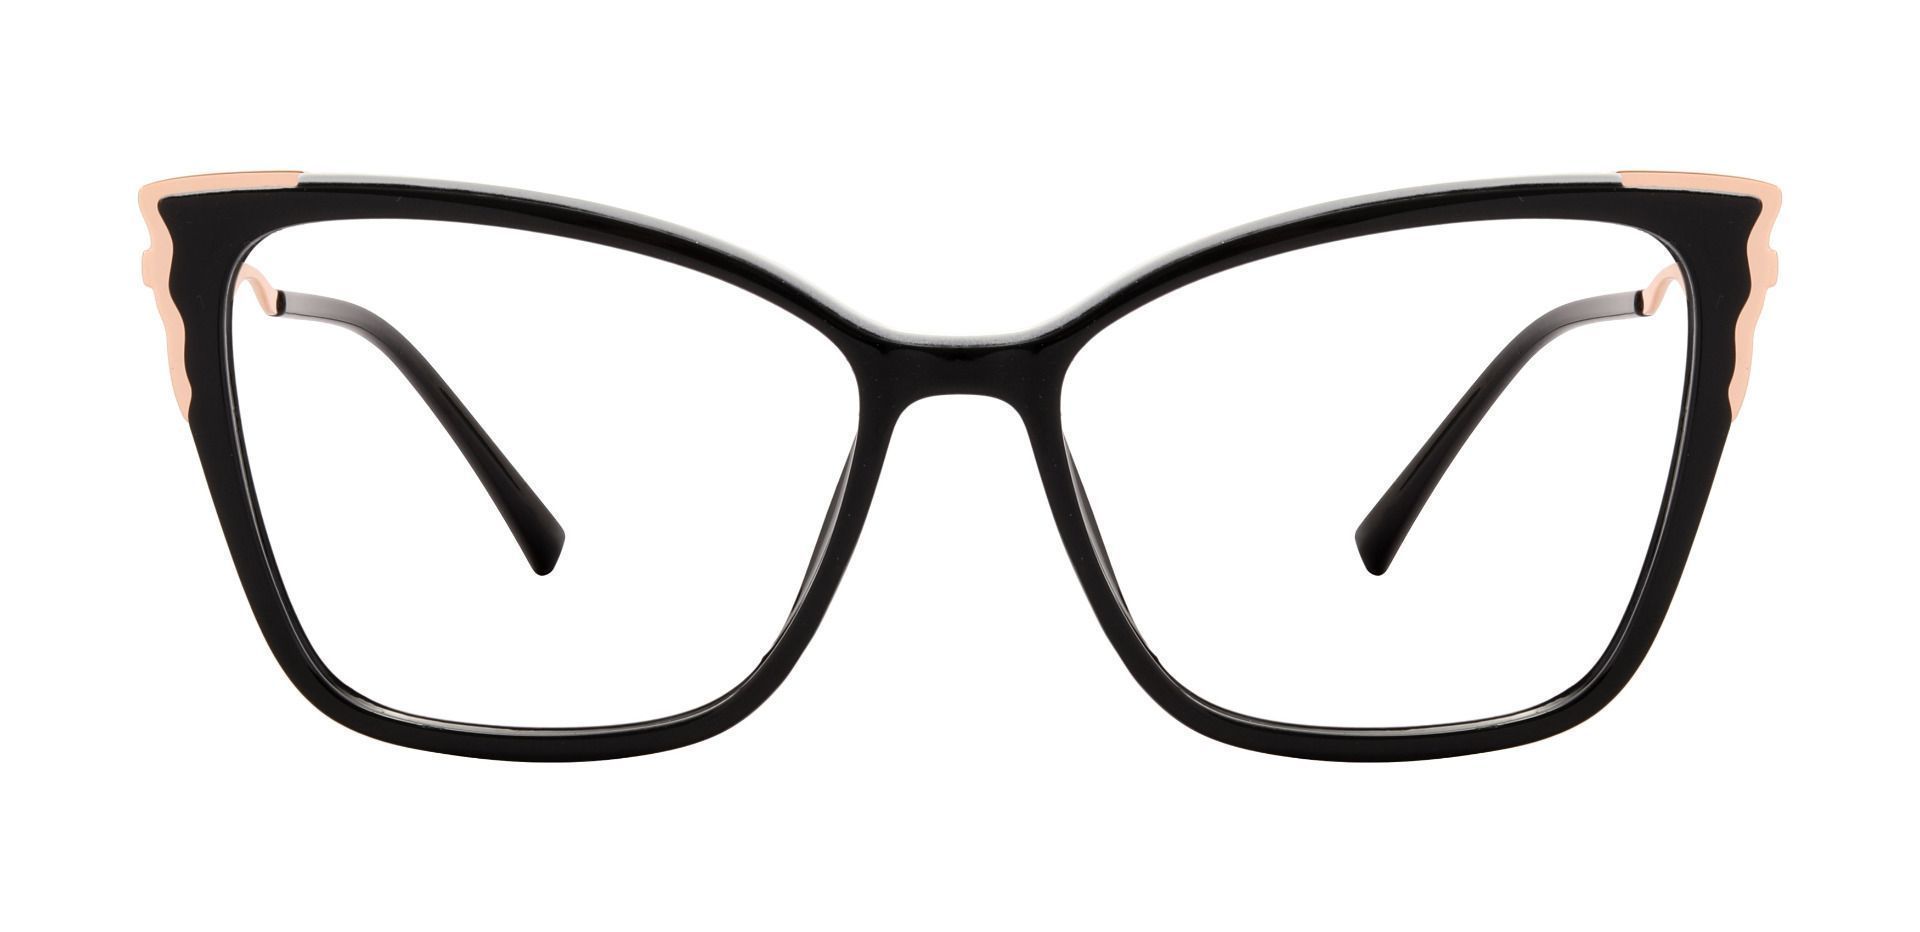 Guadalupe Cat Eye Prescription Glasses - Black